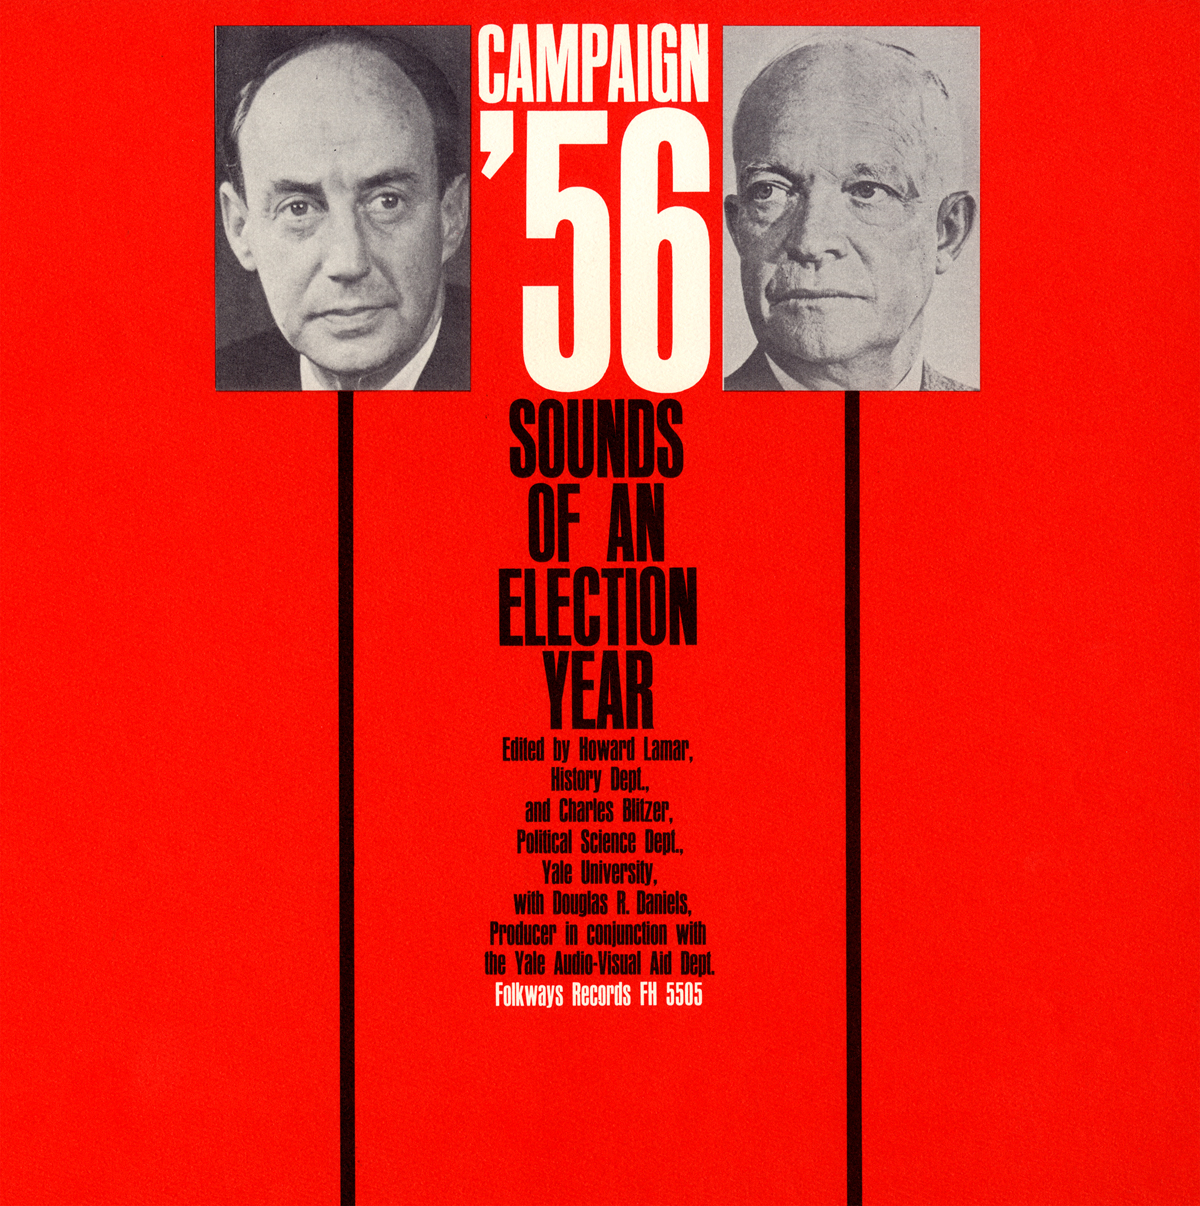 CAMPAIGN 56: ELECTION / VAR